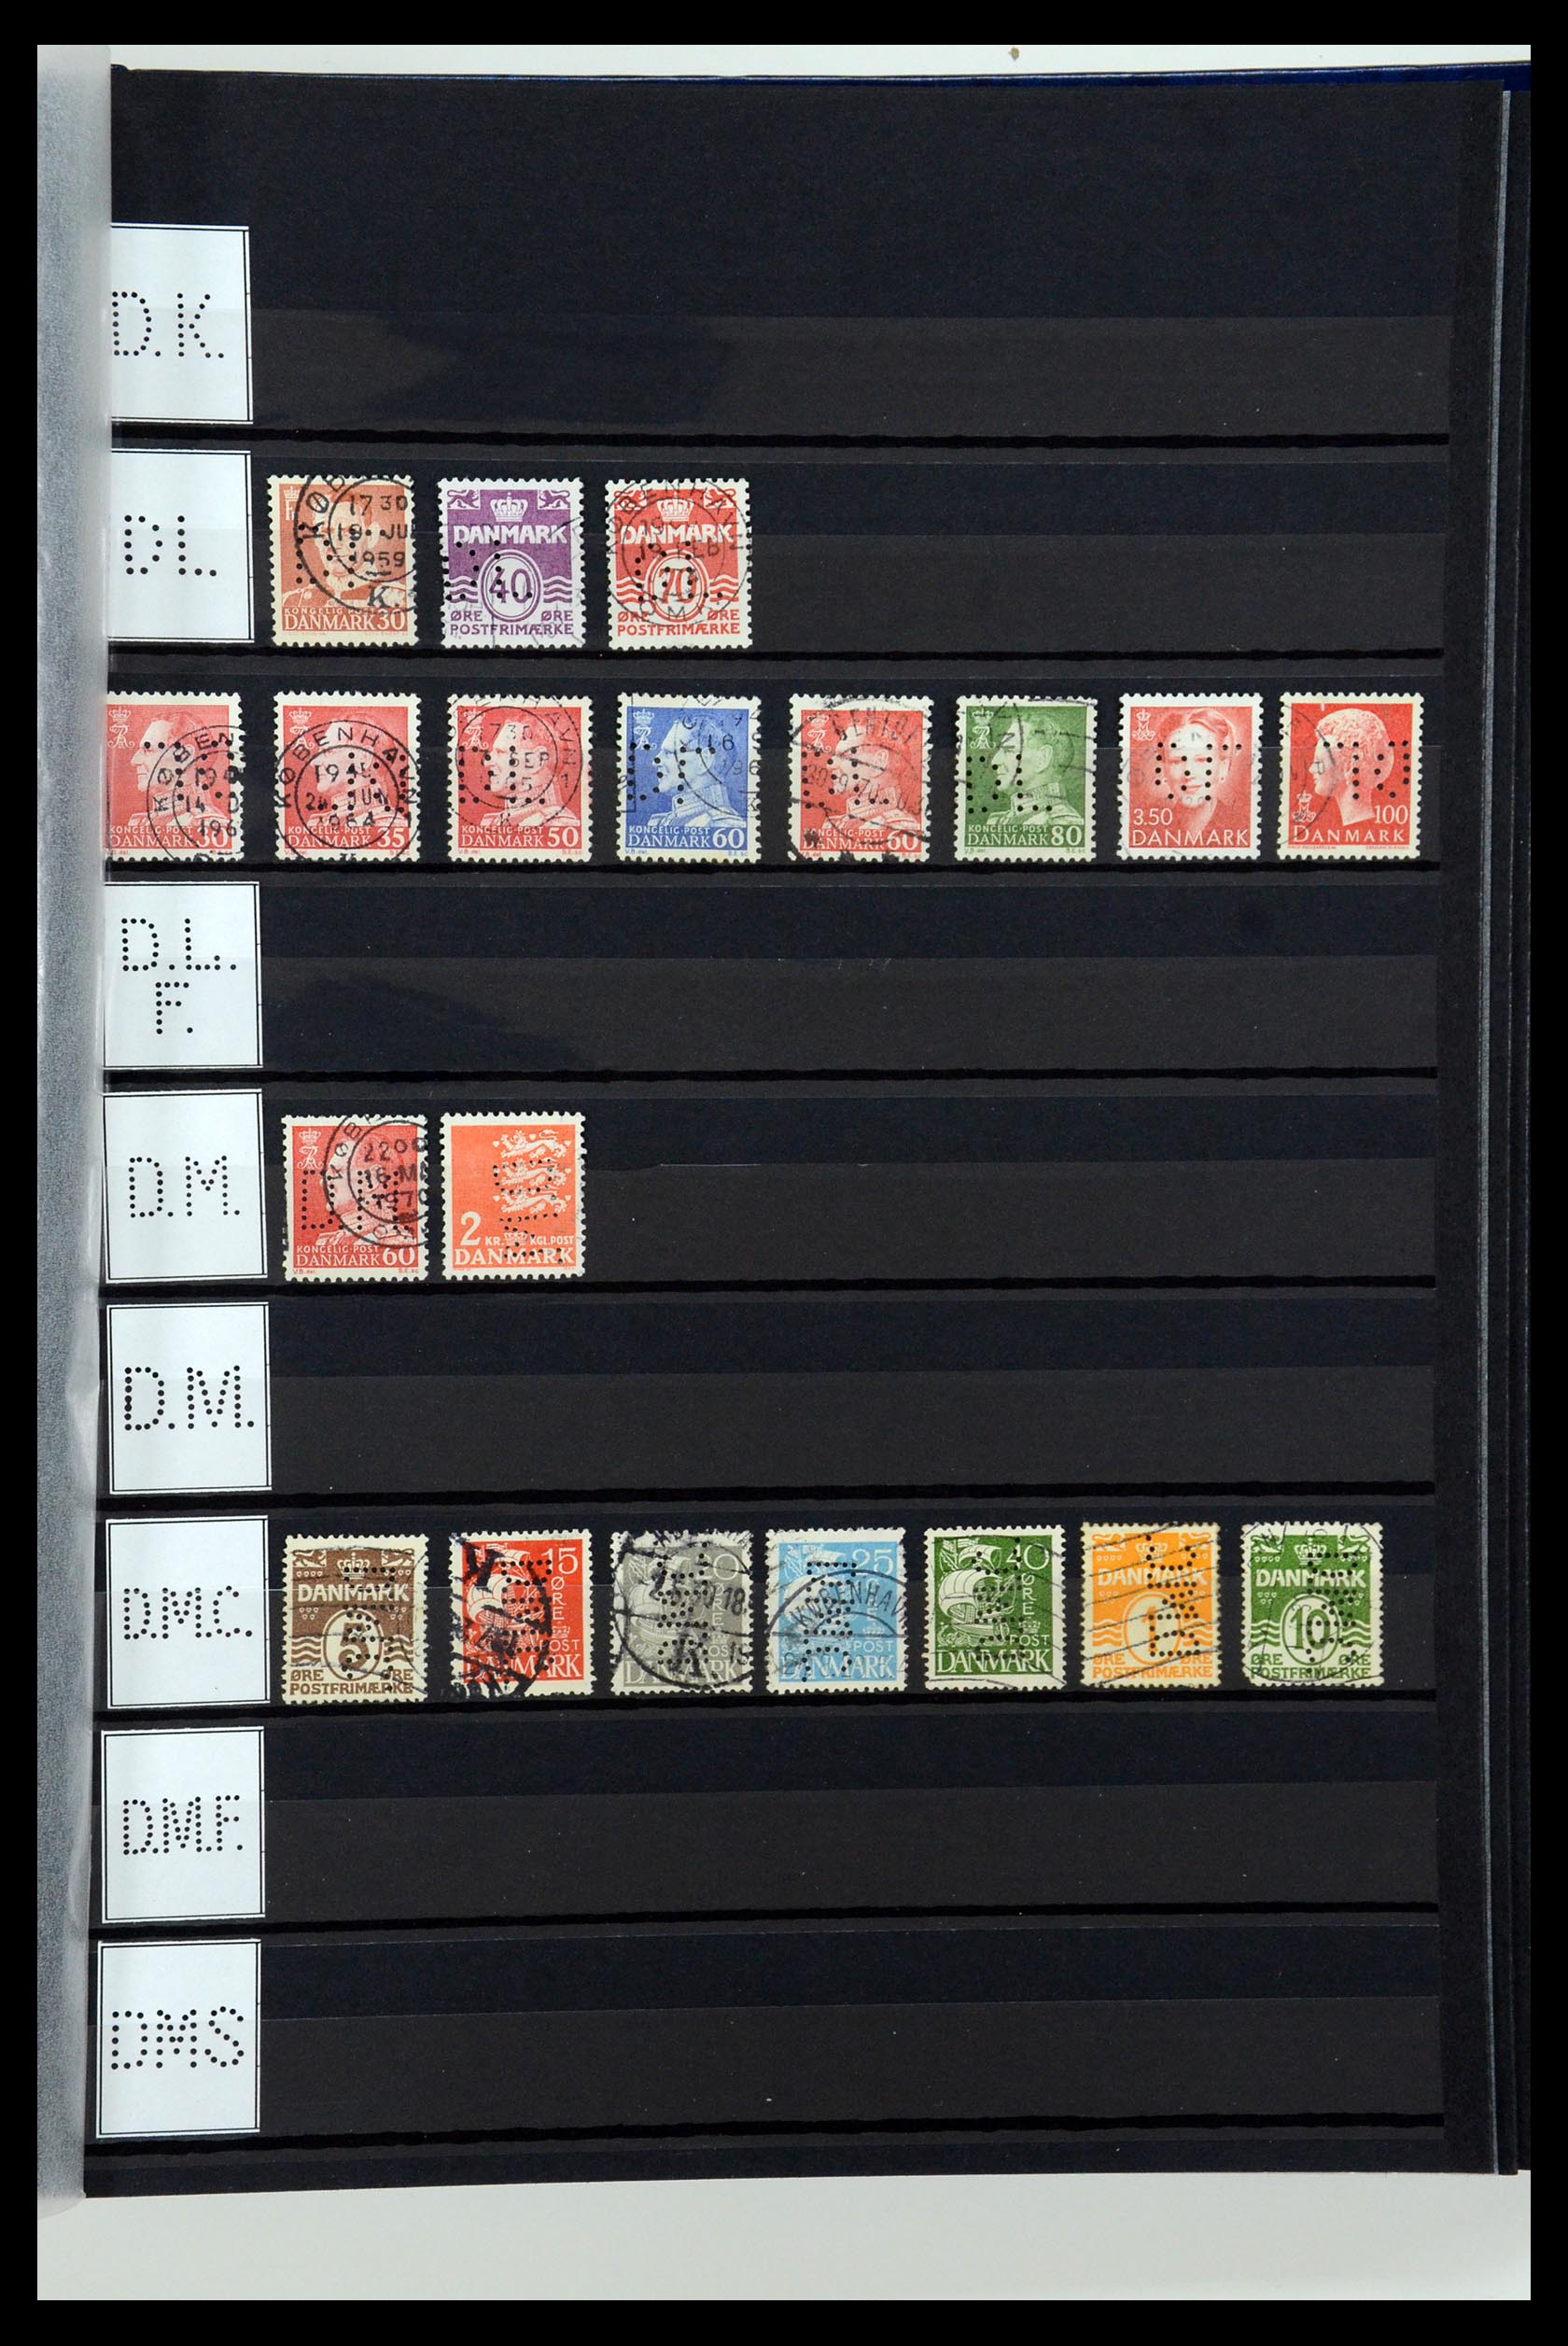 36396 038 - Stamp collection 36396 Denmark perfins.